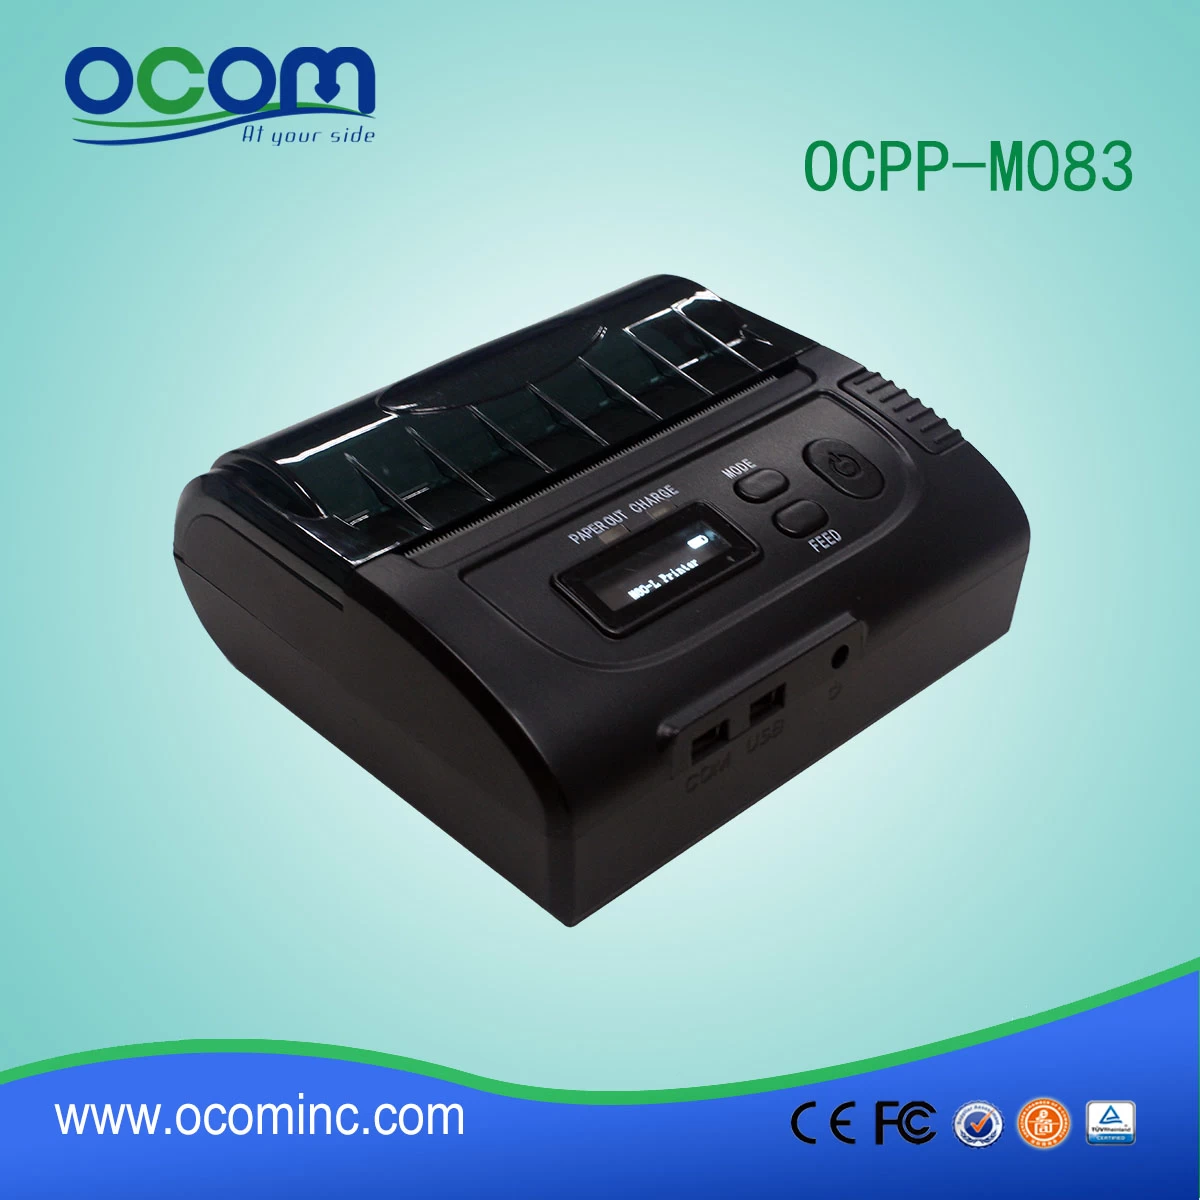 OCPP-M083 80mm handheld mobile bluetooth printer support IOS